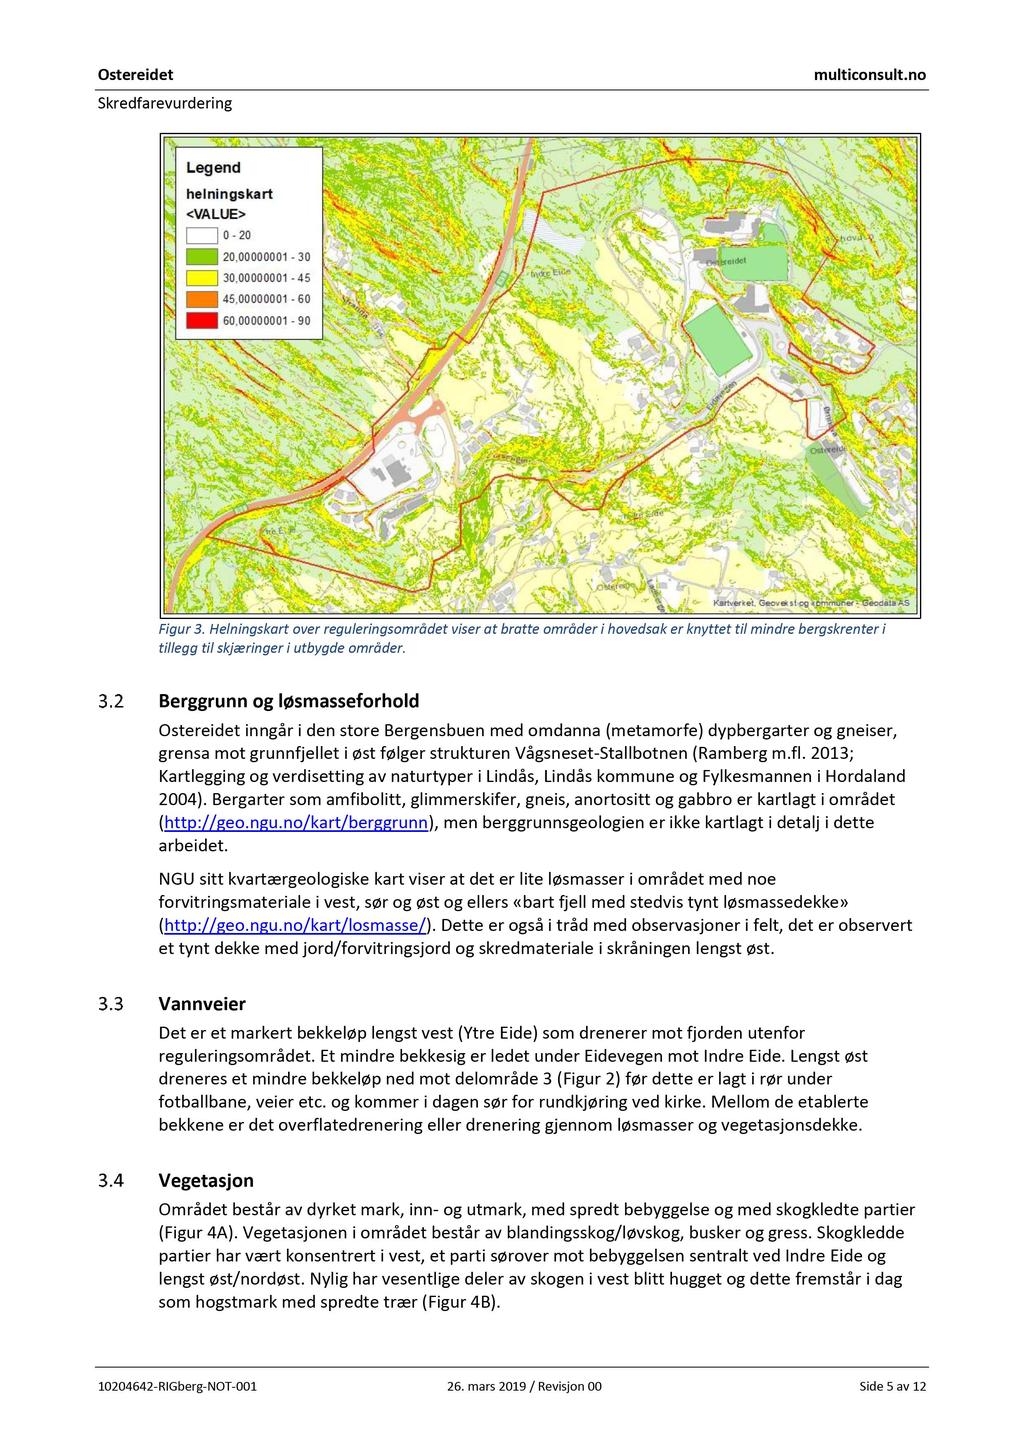 Figur 3. Helningskartover reguleringsområdet viser at bratte områder i hovedsak er knyttet til mindre bergskrenter i tillegg til skjæringer i utbygde områder.